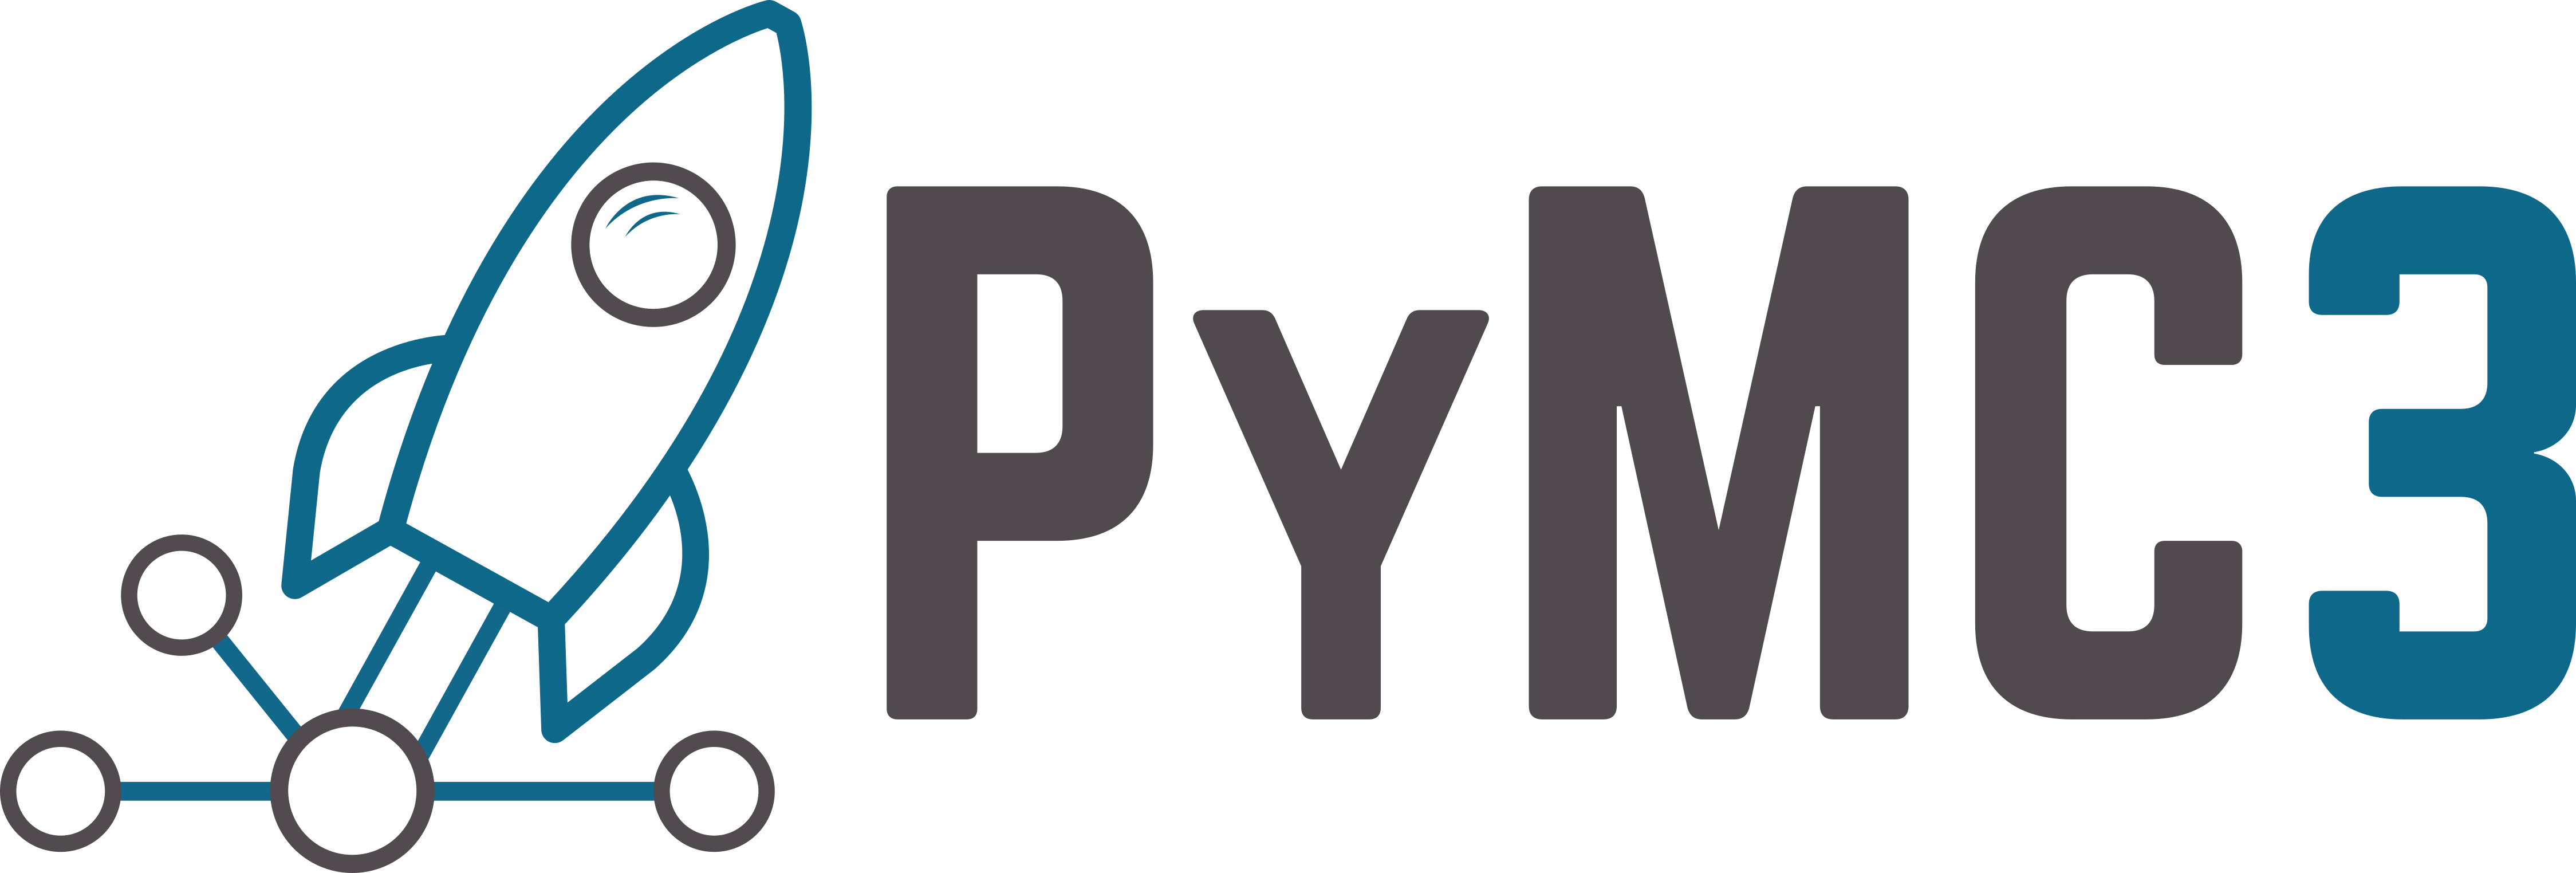 ../_images/PyMC3-logo.png